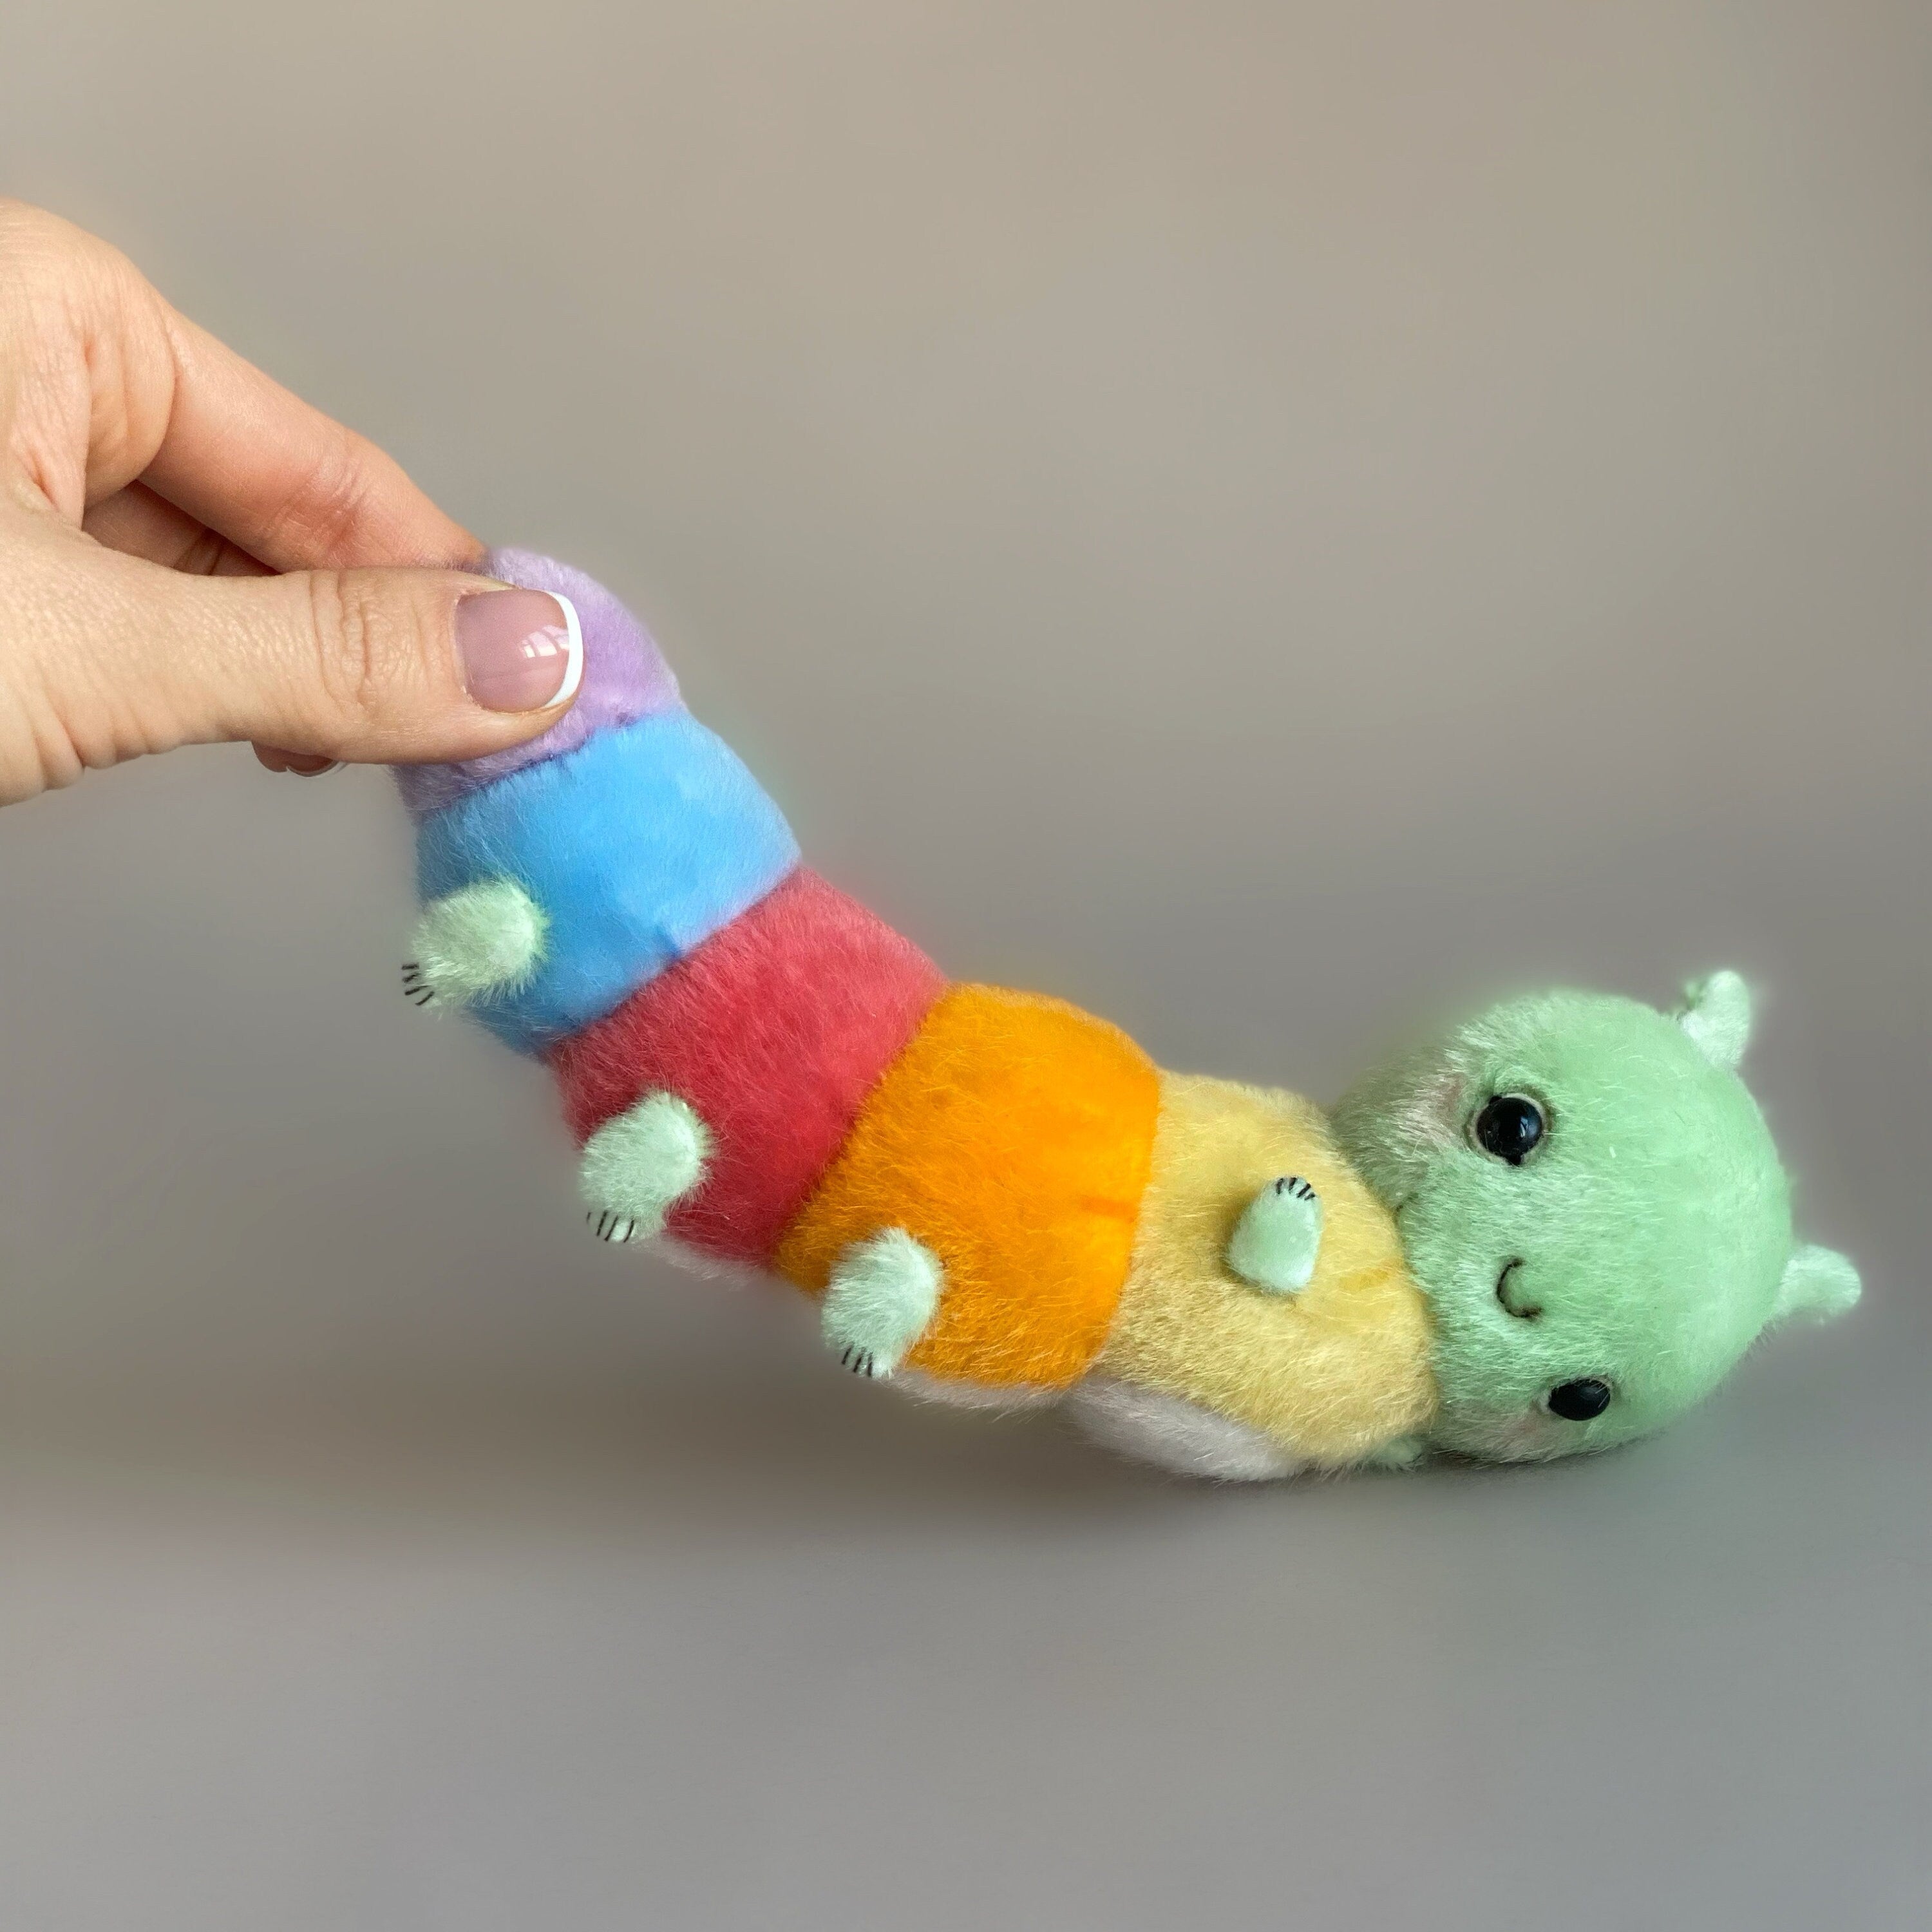 Caterpillar -PDF Pattern digital, artist pattern, stuffed toy tutorials, soft animal, soft toy diy craft kit for adults gift by TSminibears